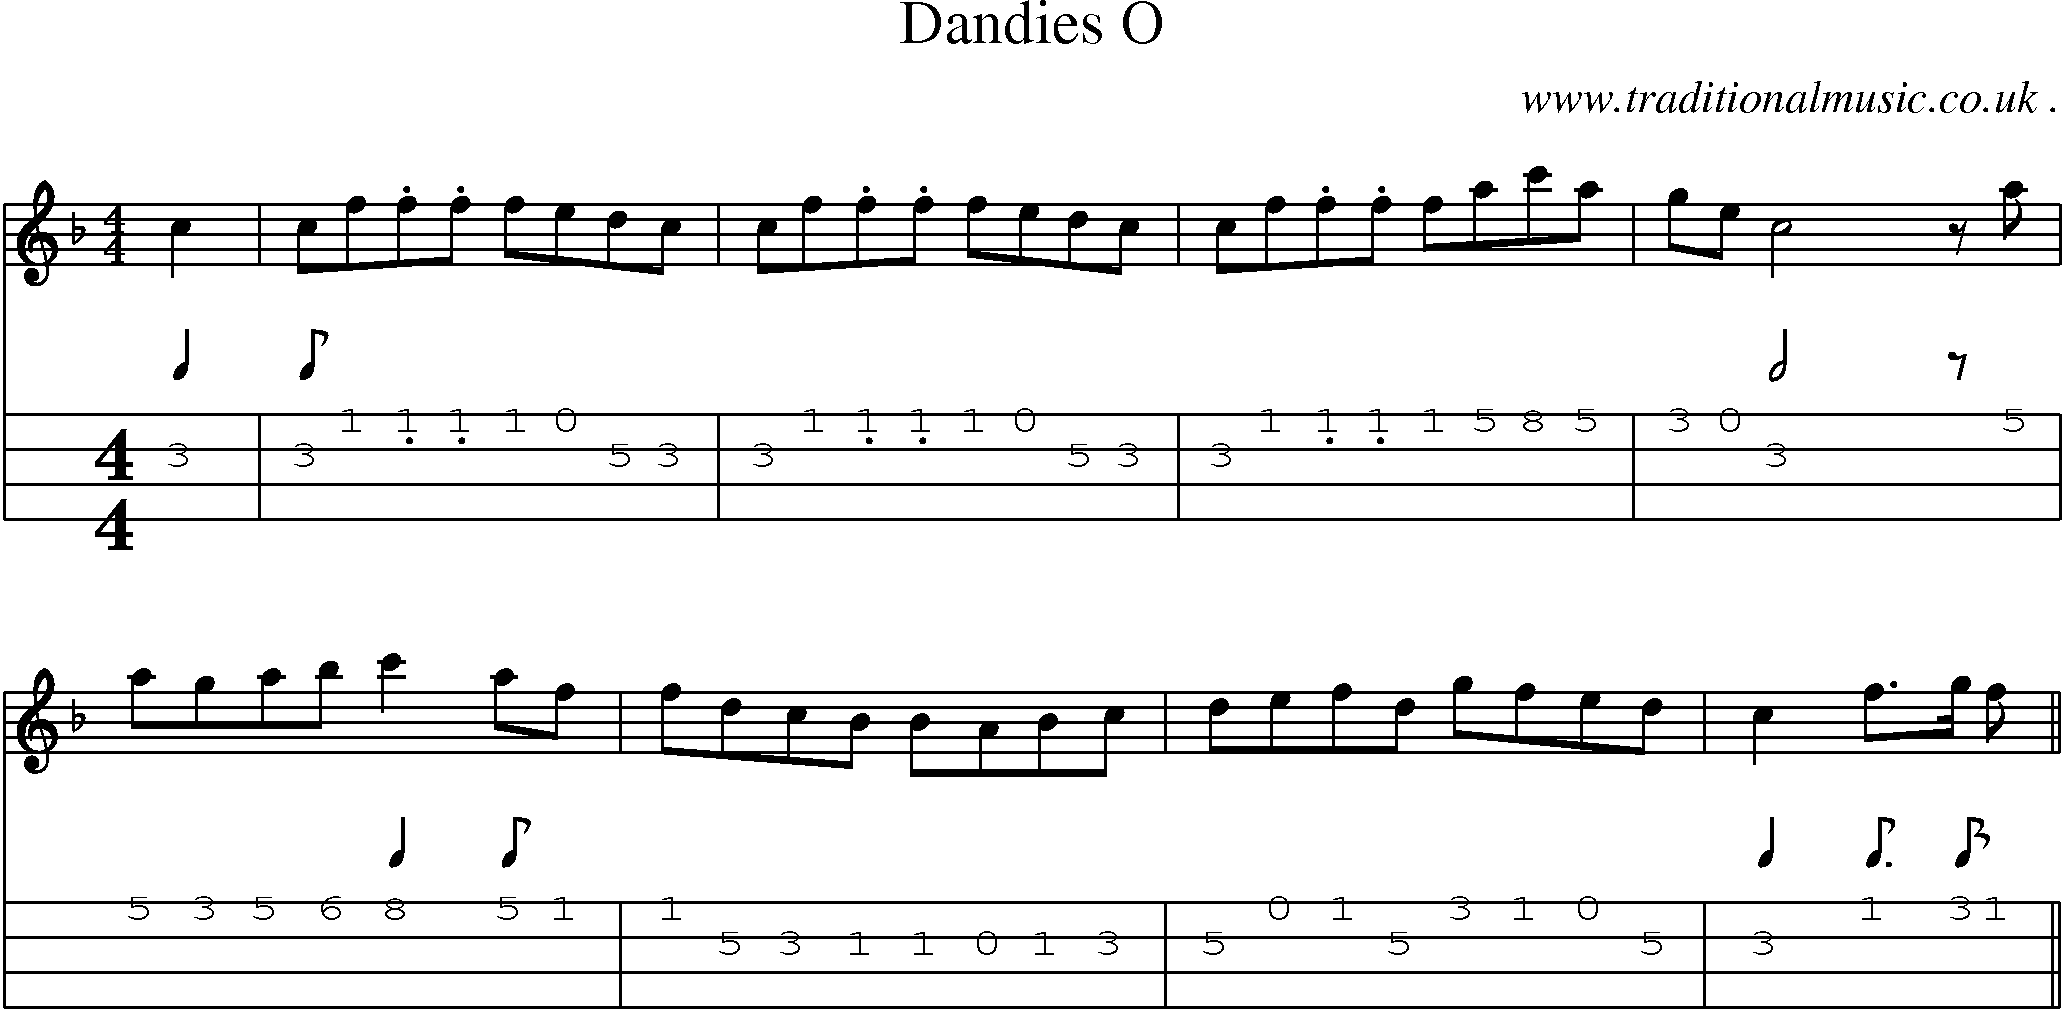 Sheet-Music and Mandolin Tabs for Dandies O